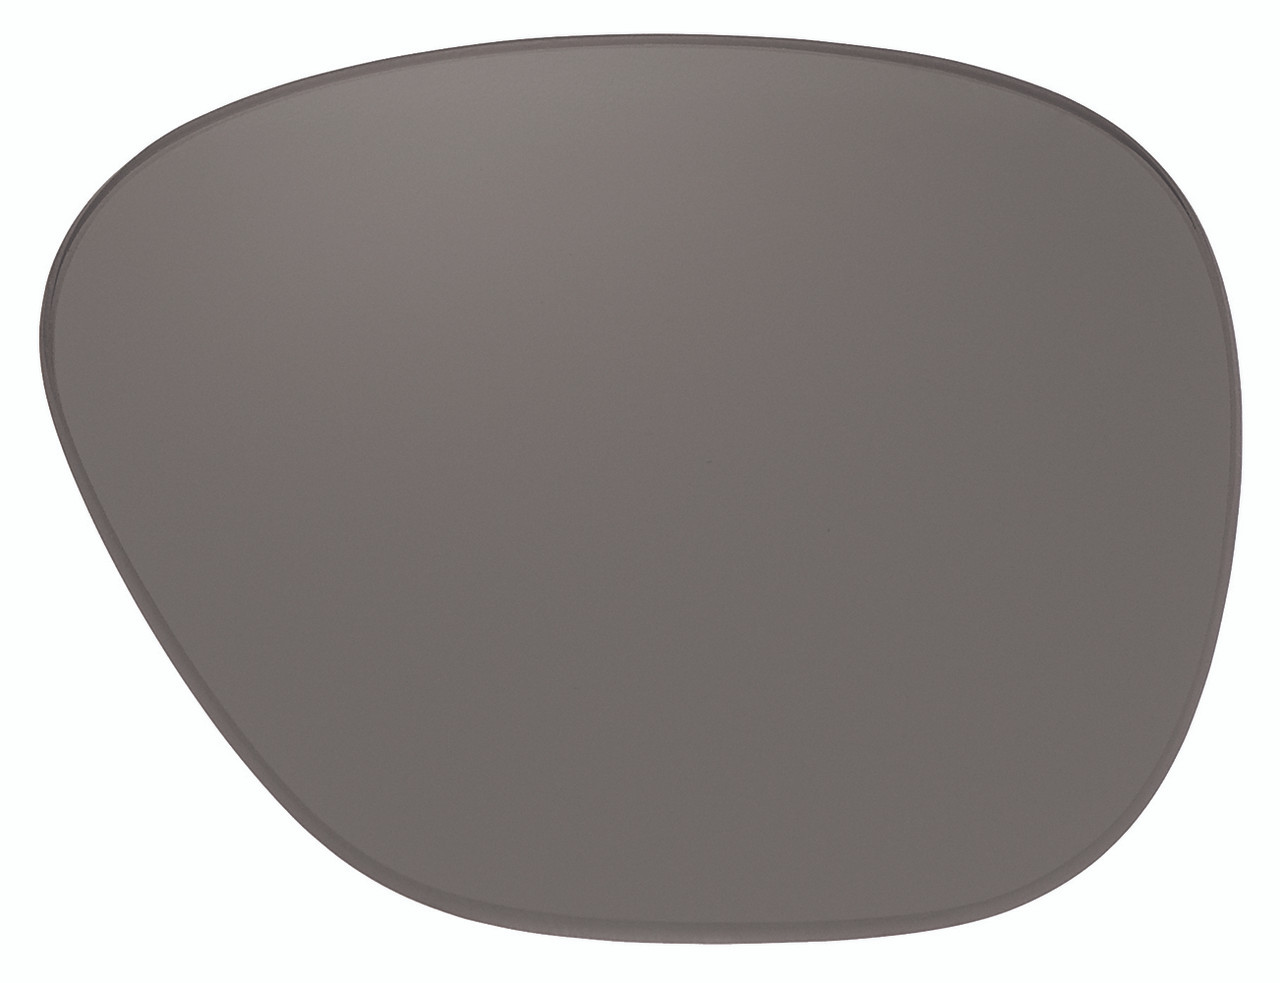 Suncloud Sentry Replacement Lenses - choose color options